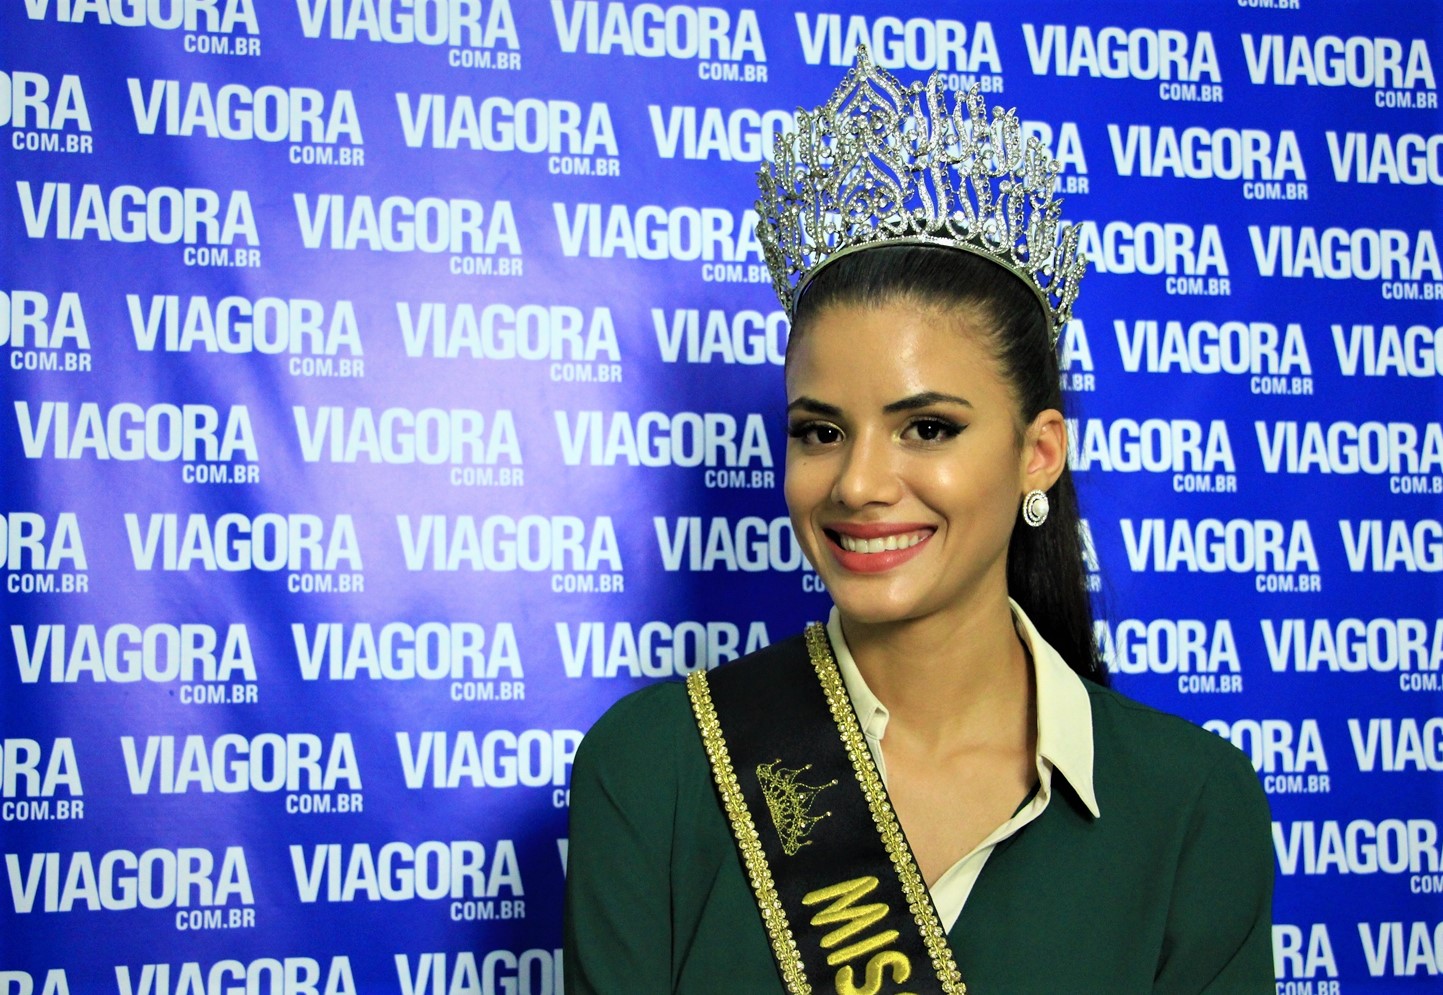 Miss Piauí 2019 Dagmara Landim